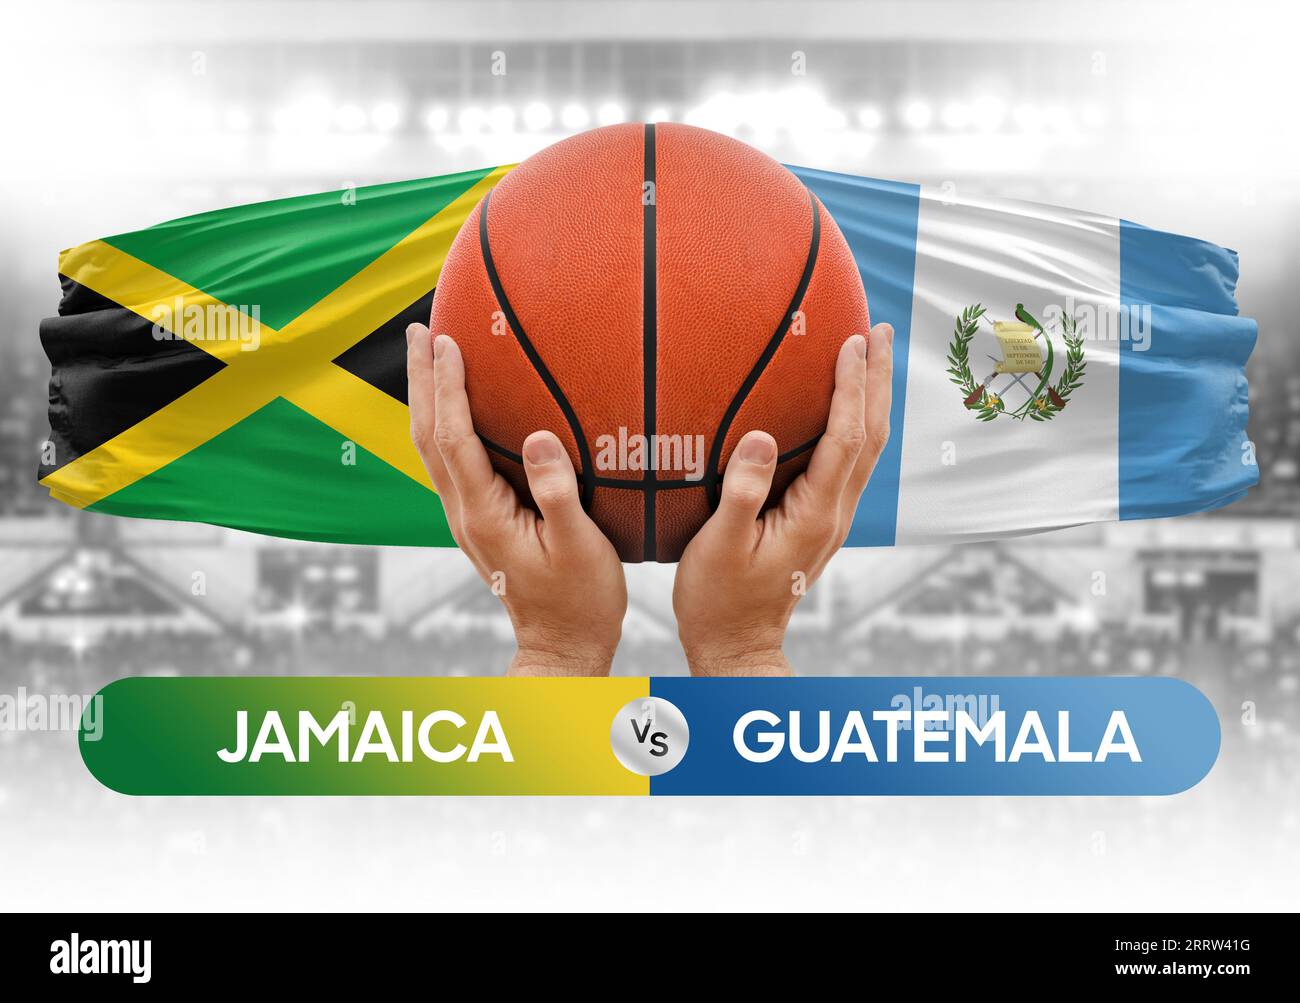 Jamaica vs Guatemala national basketball teams basket ball match competition cup concept image Stock Photo